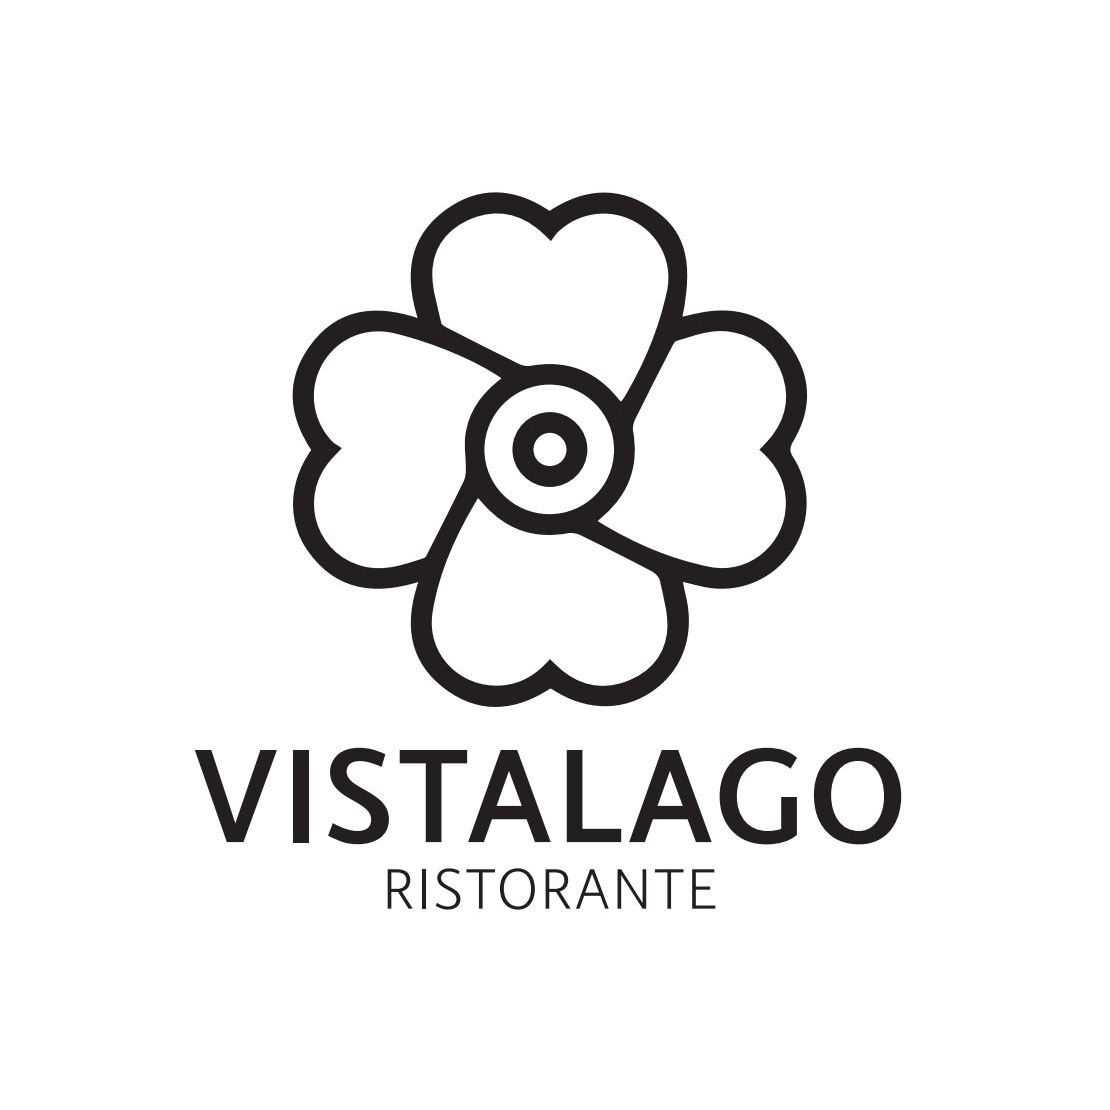 Ristorante Vistalago Lugano 091 921 10 48